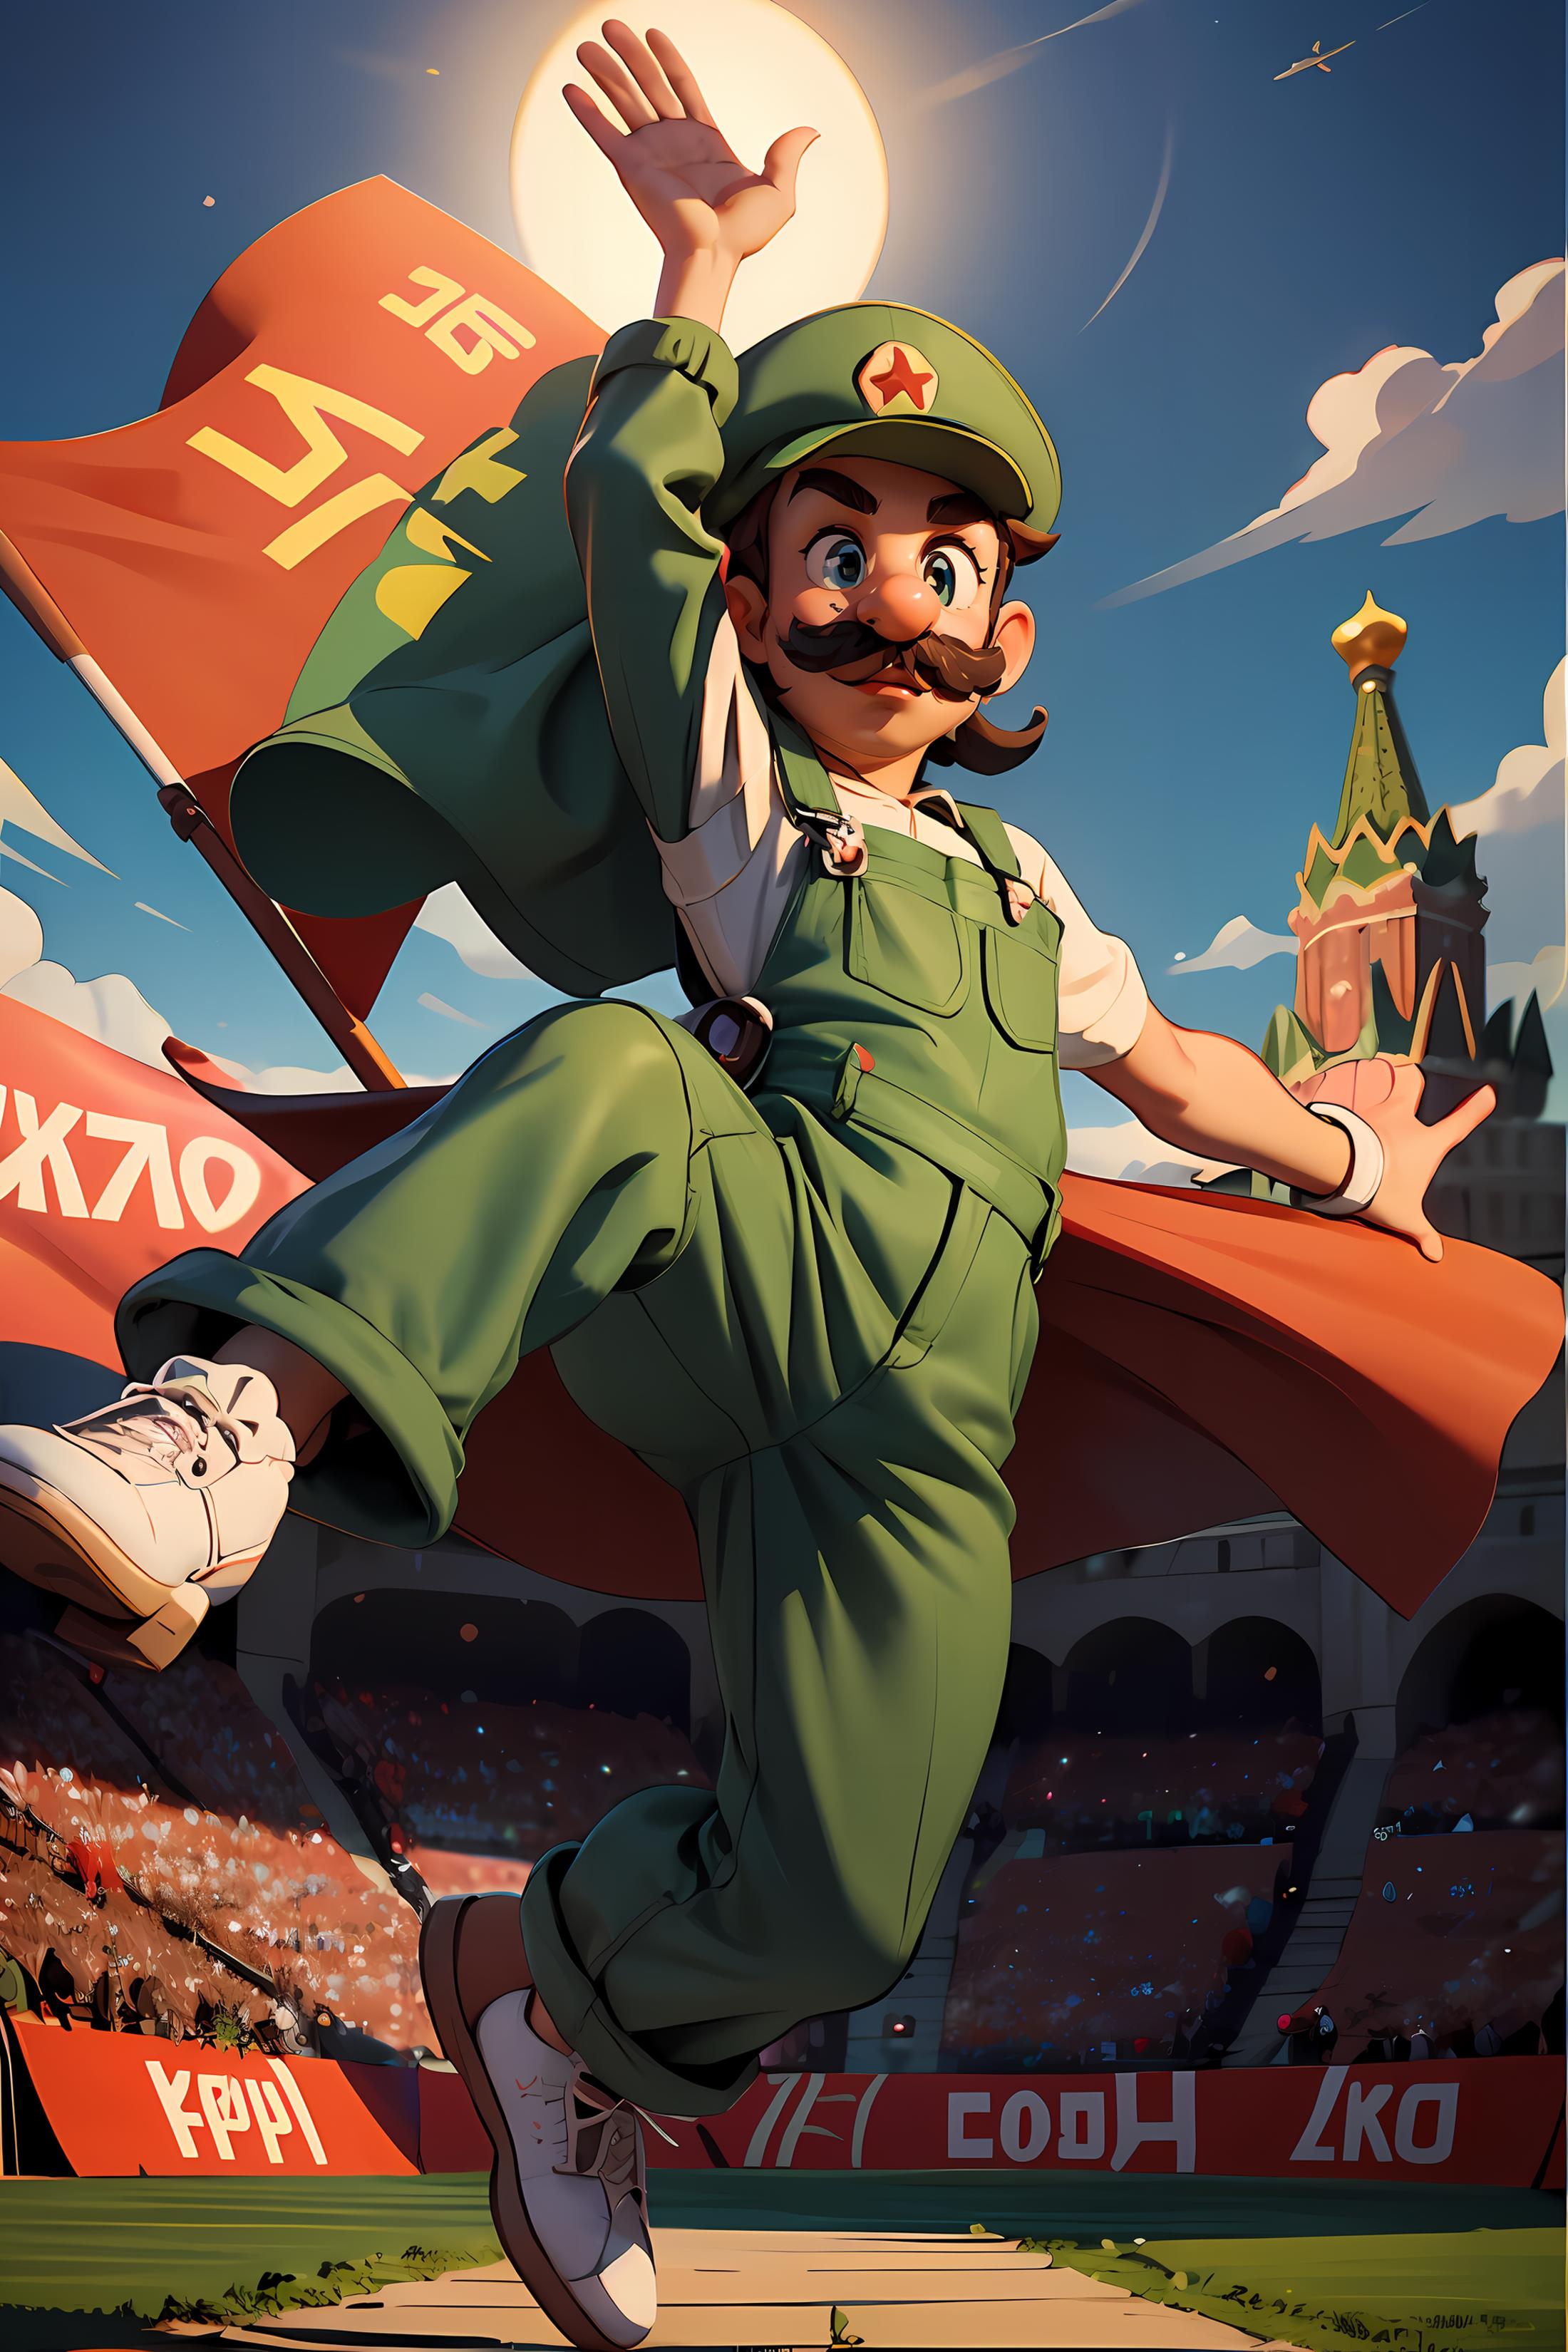 Luigi | Mario Series image by anothercivitaiaccount